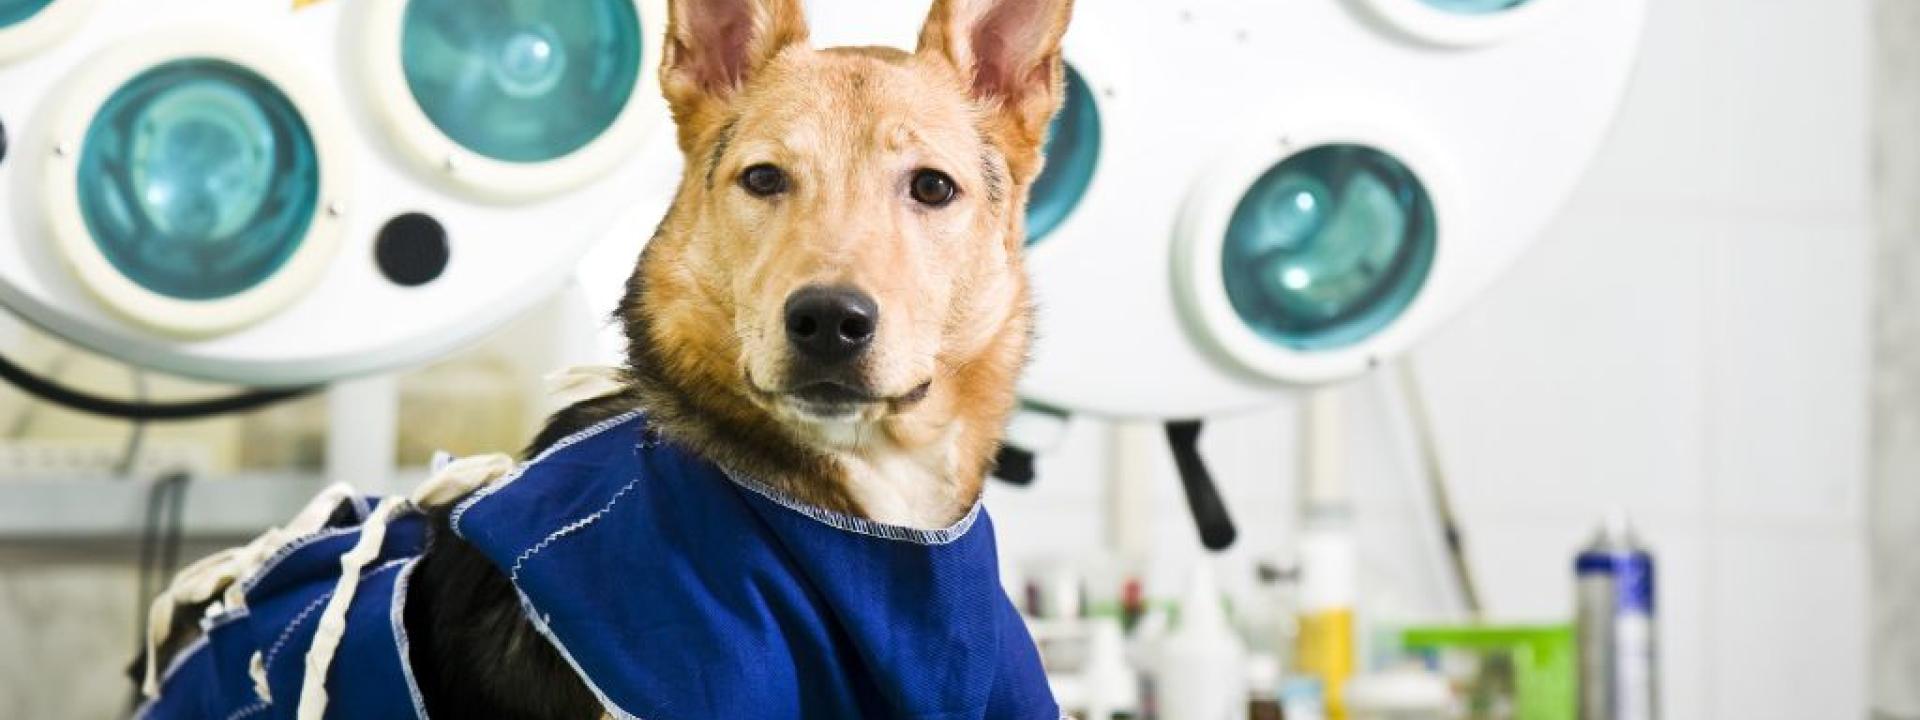 Dog wearing a protective post surgery shirt